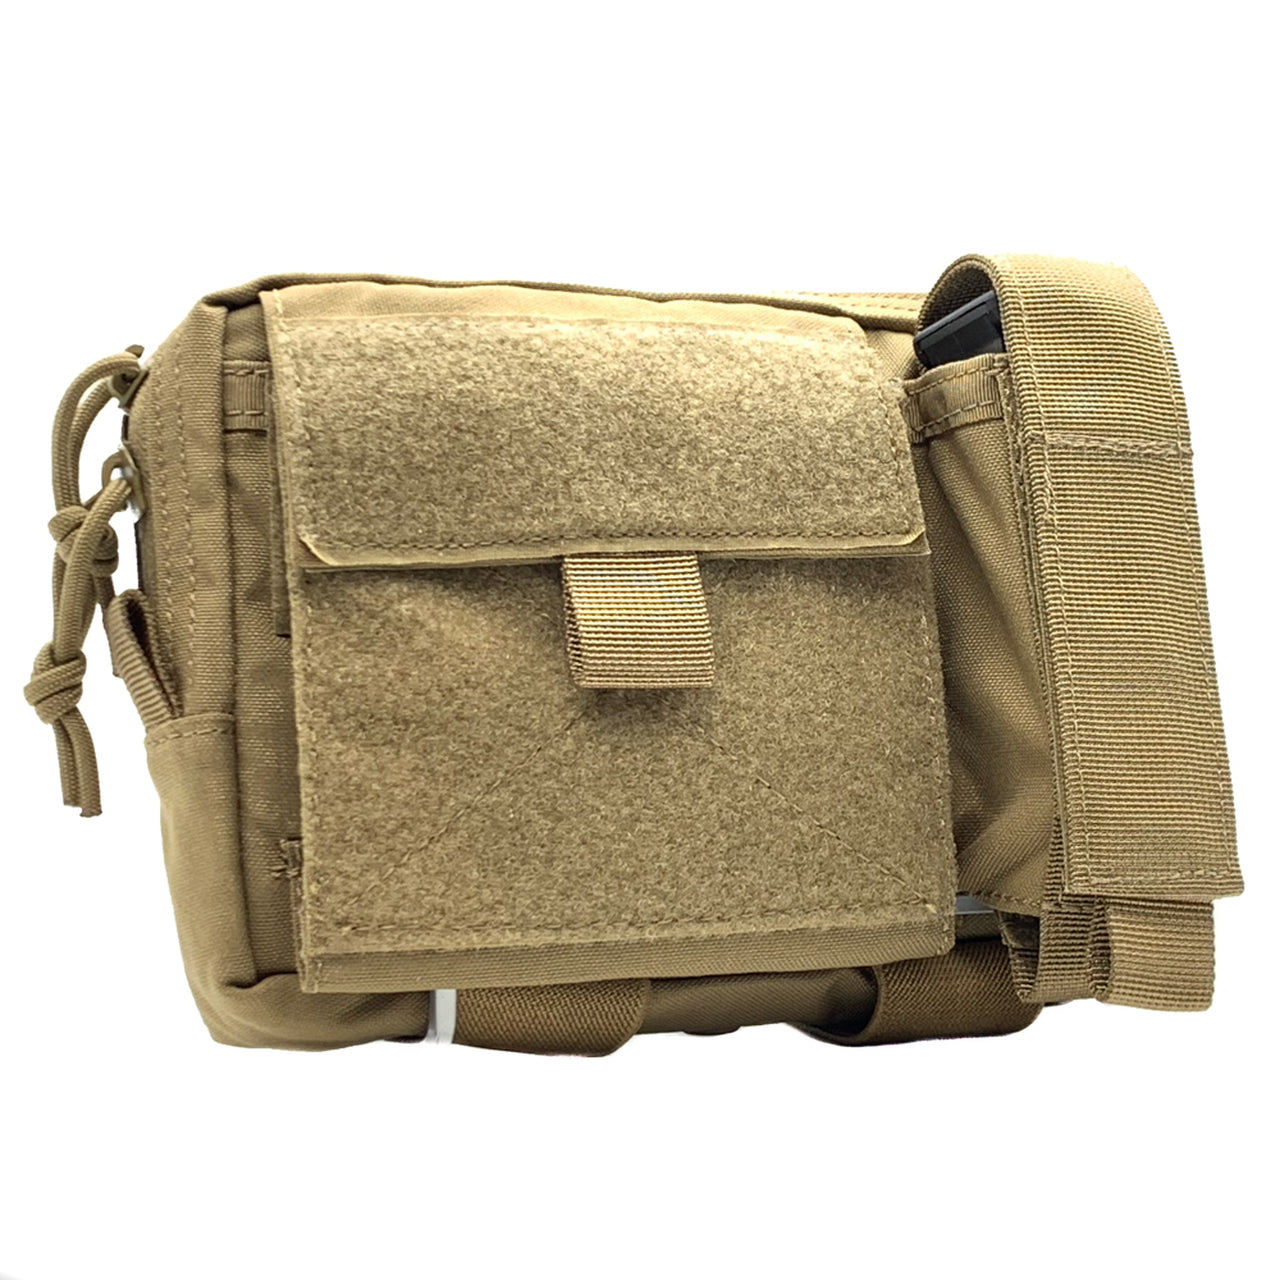 Shellback Tactical Super Admin Pouch, Coyote tactical messenger bag.